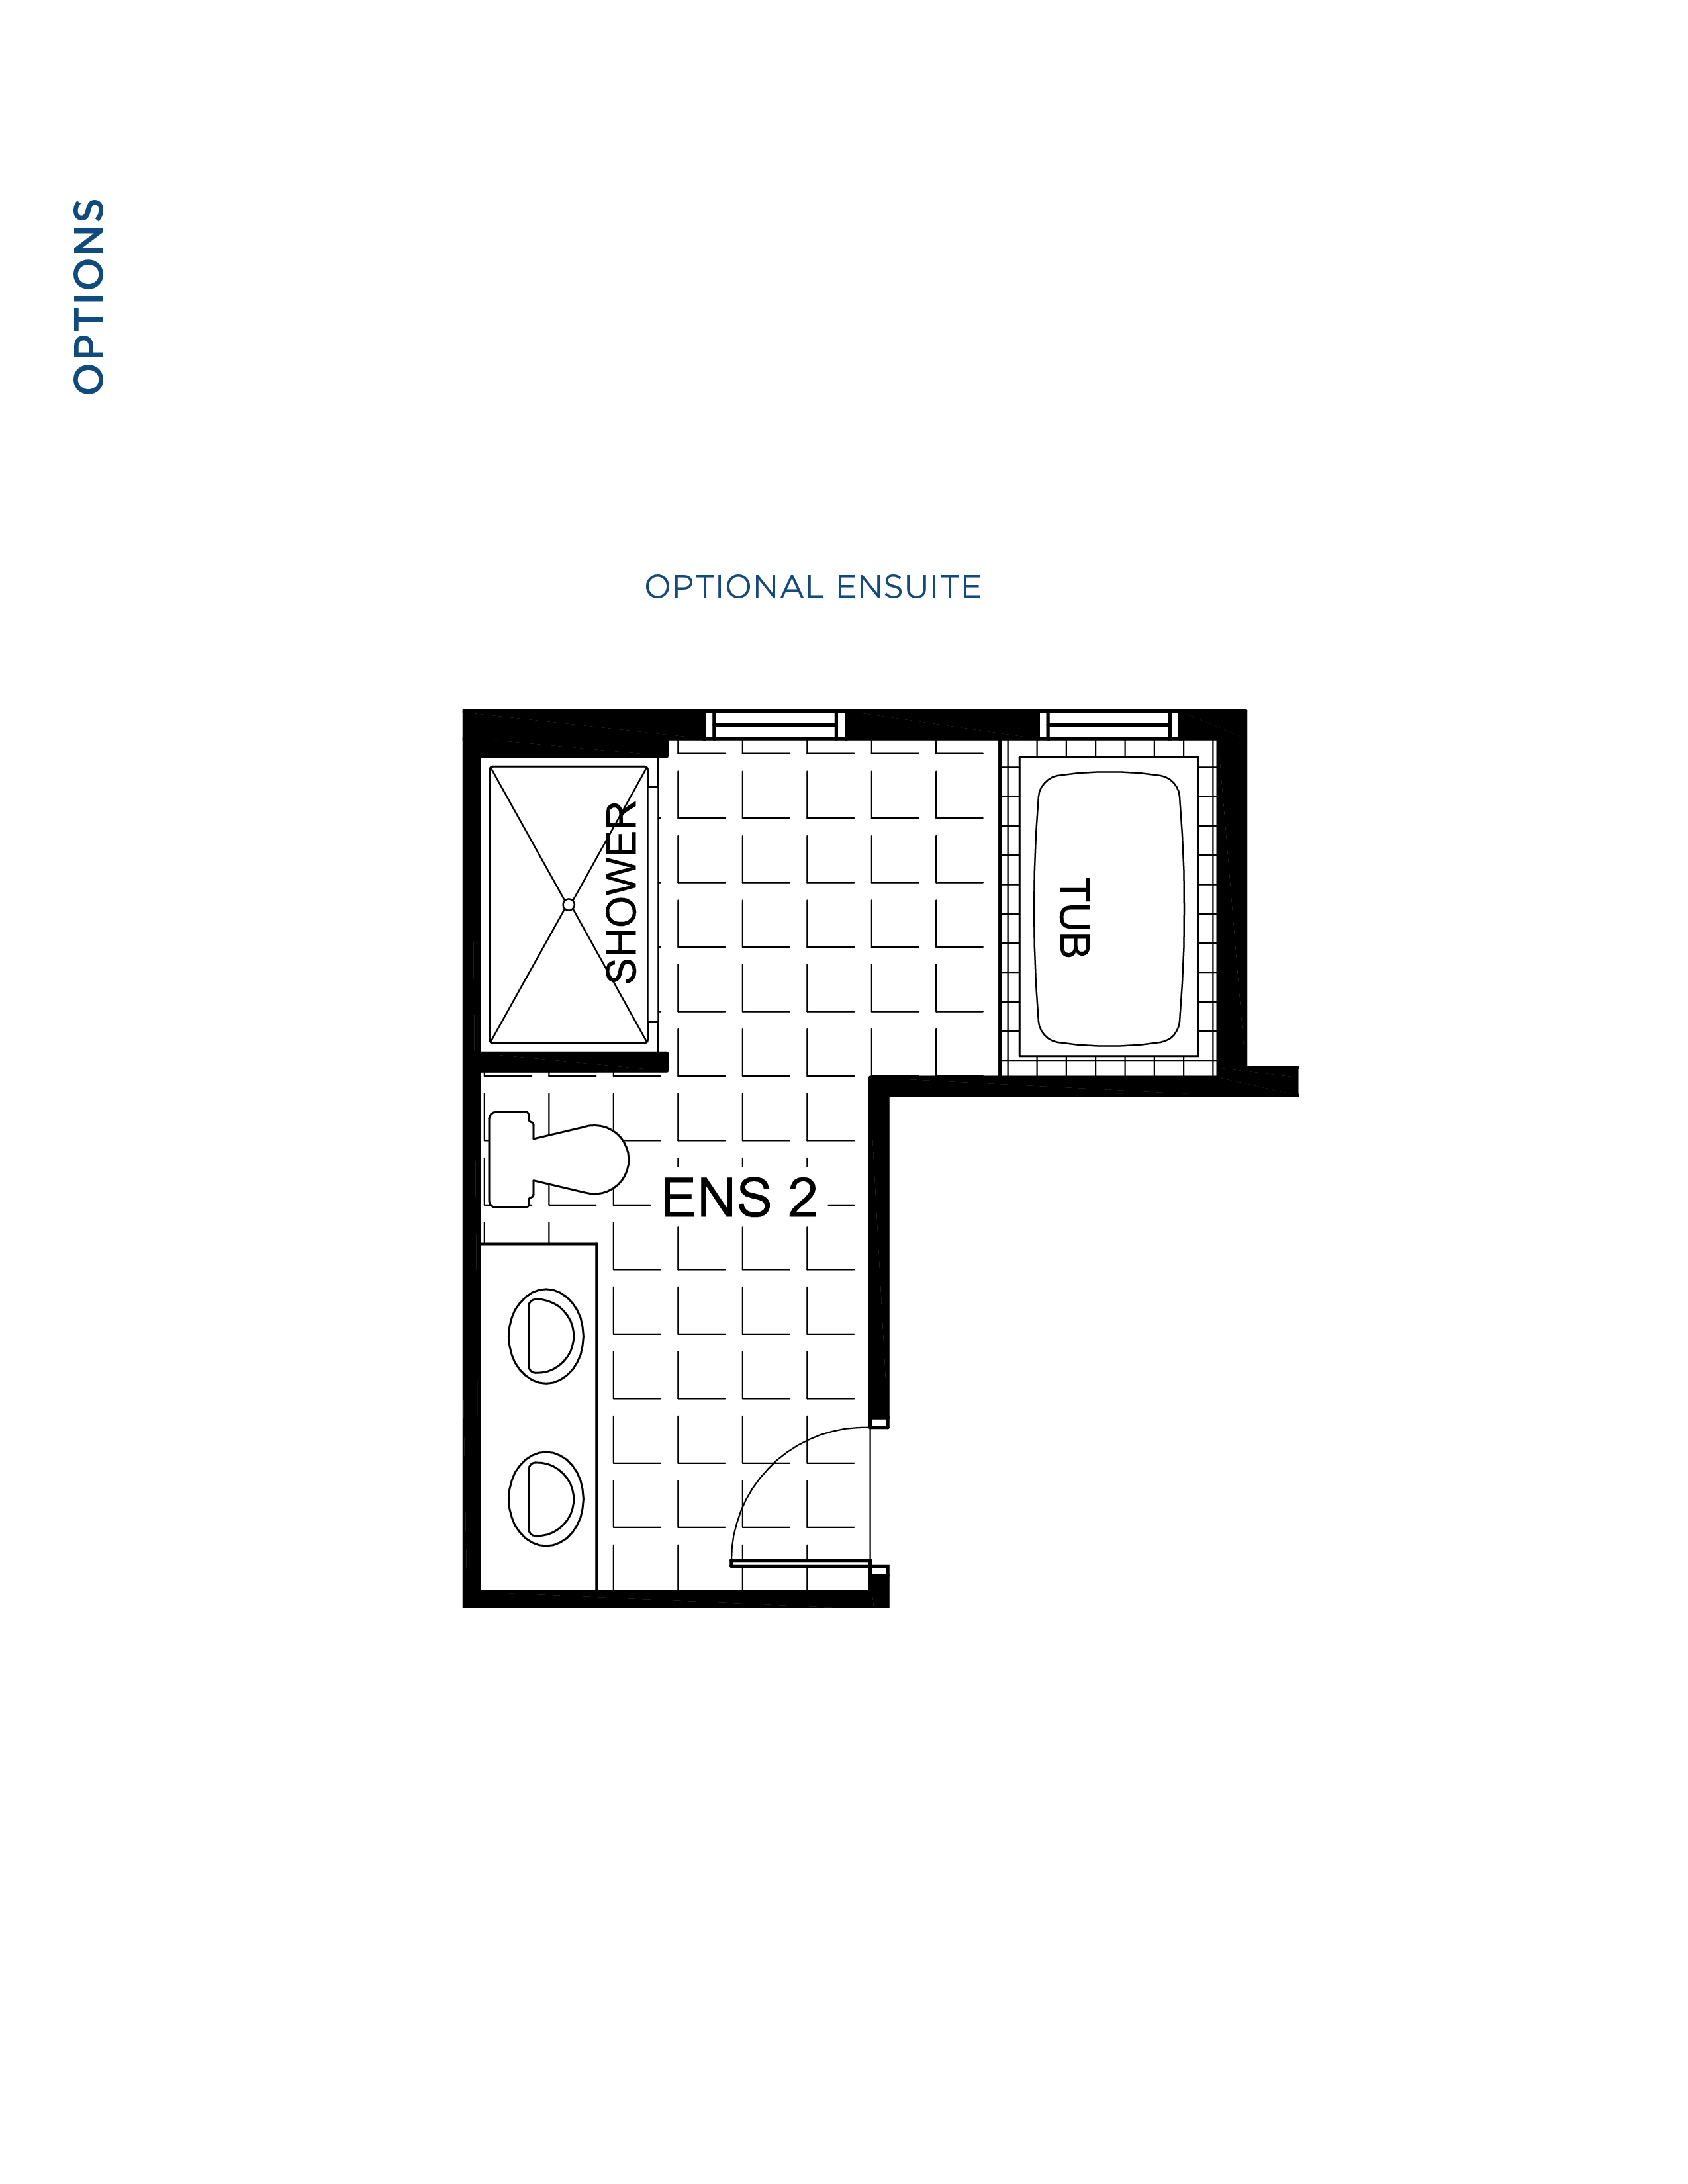 Floorplan Options - Ivy